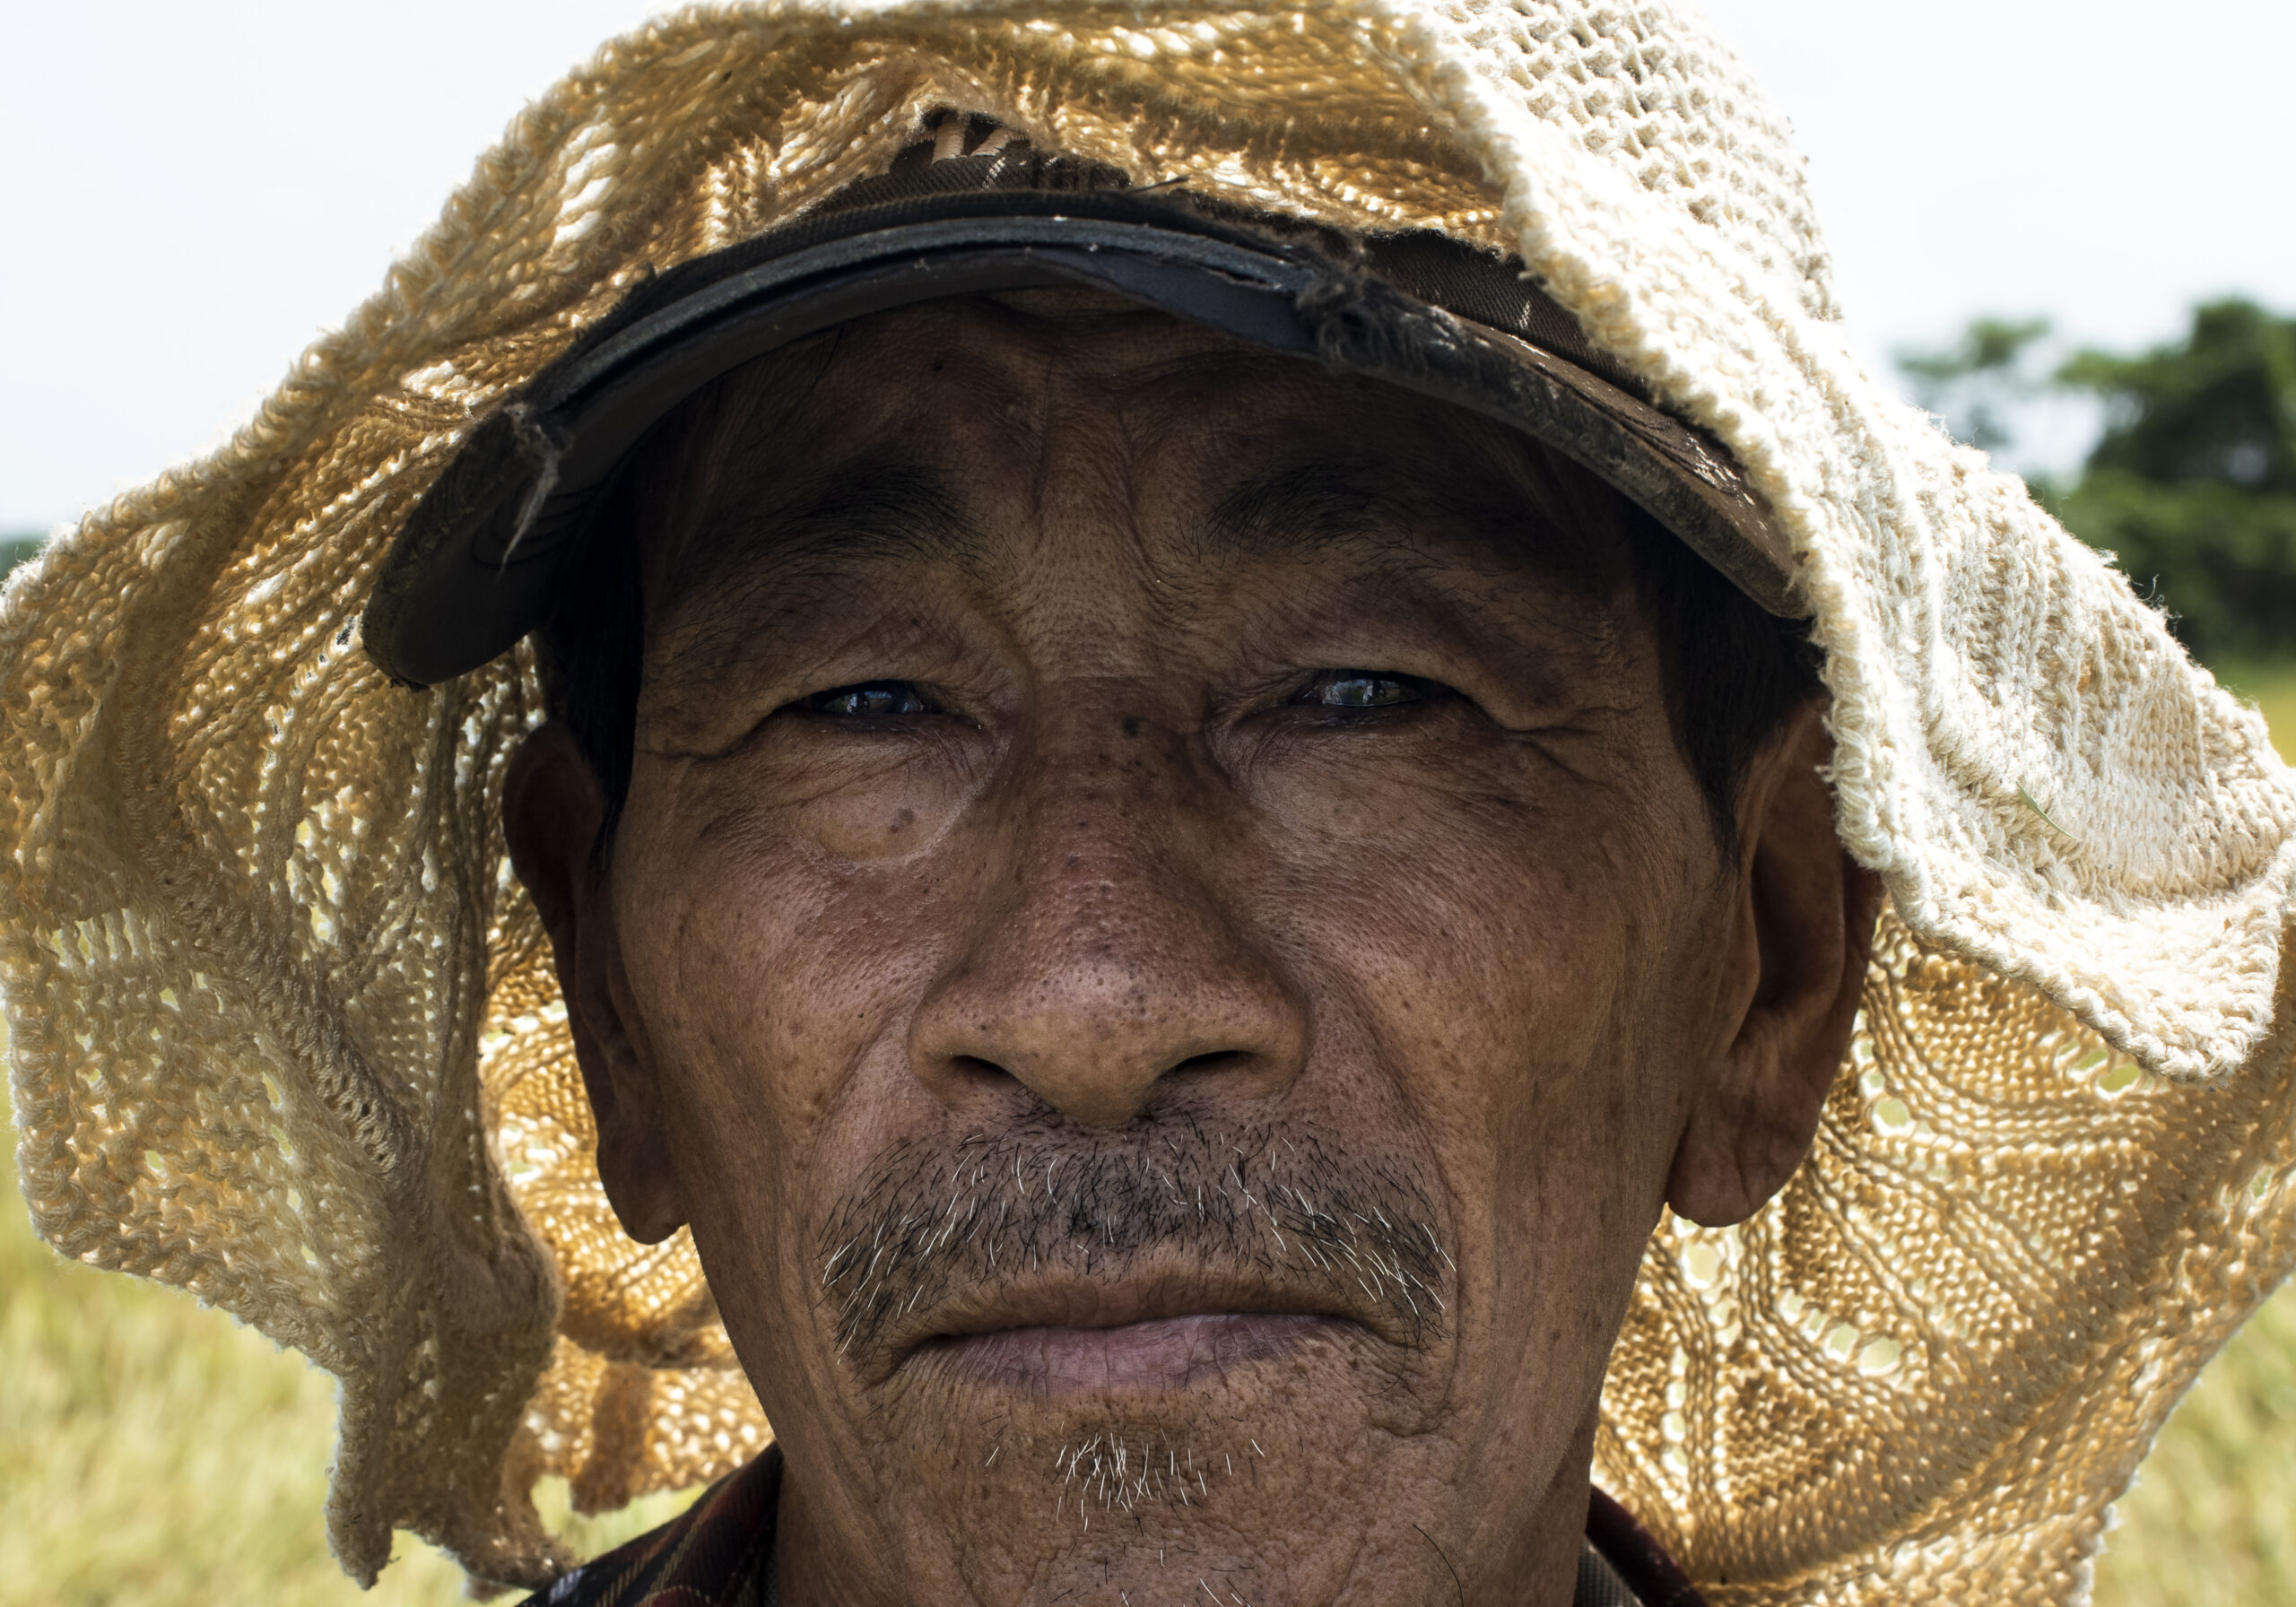 Rise field worker posing during his break in Cam Kim island in Vietnam